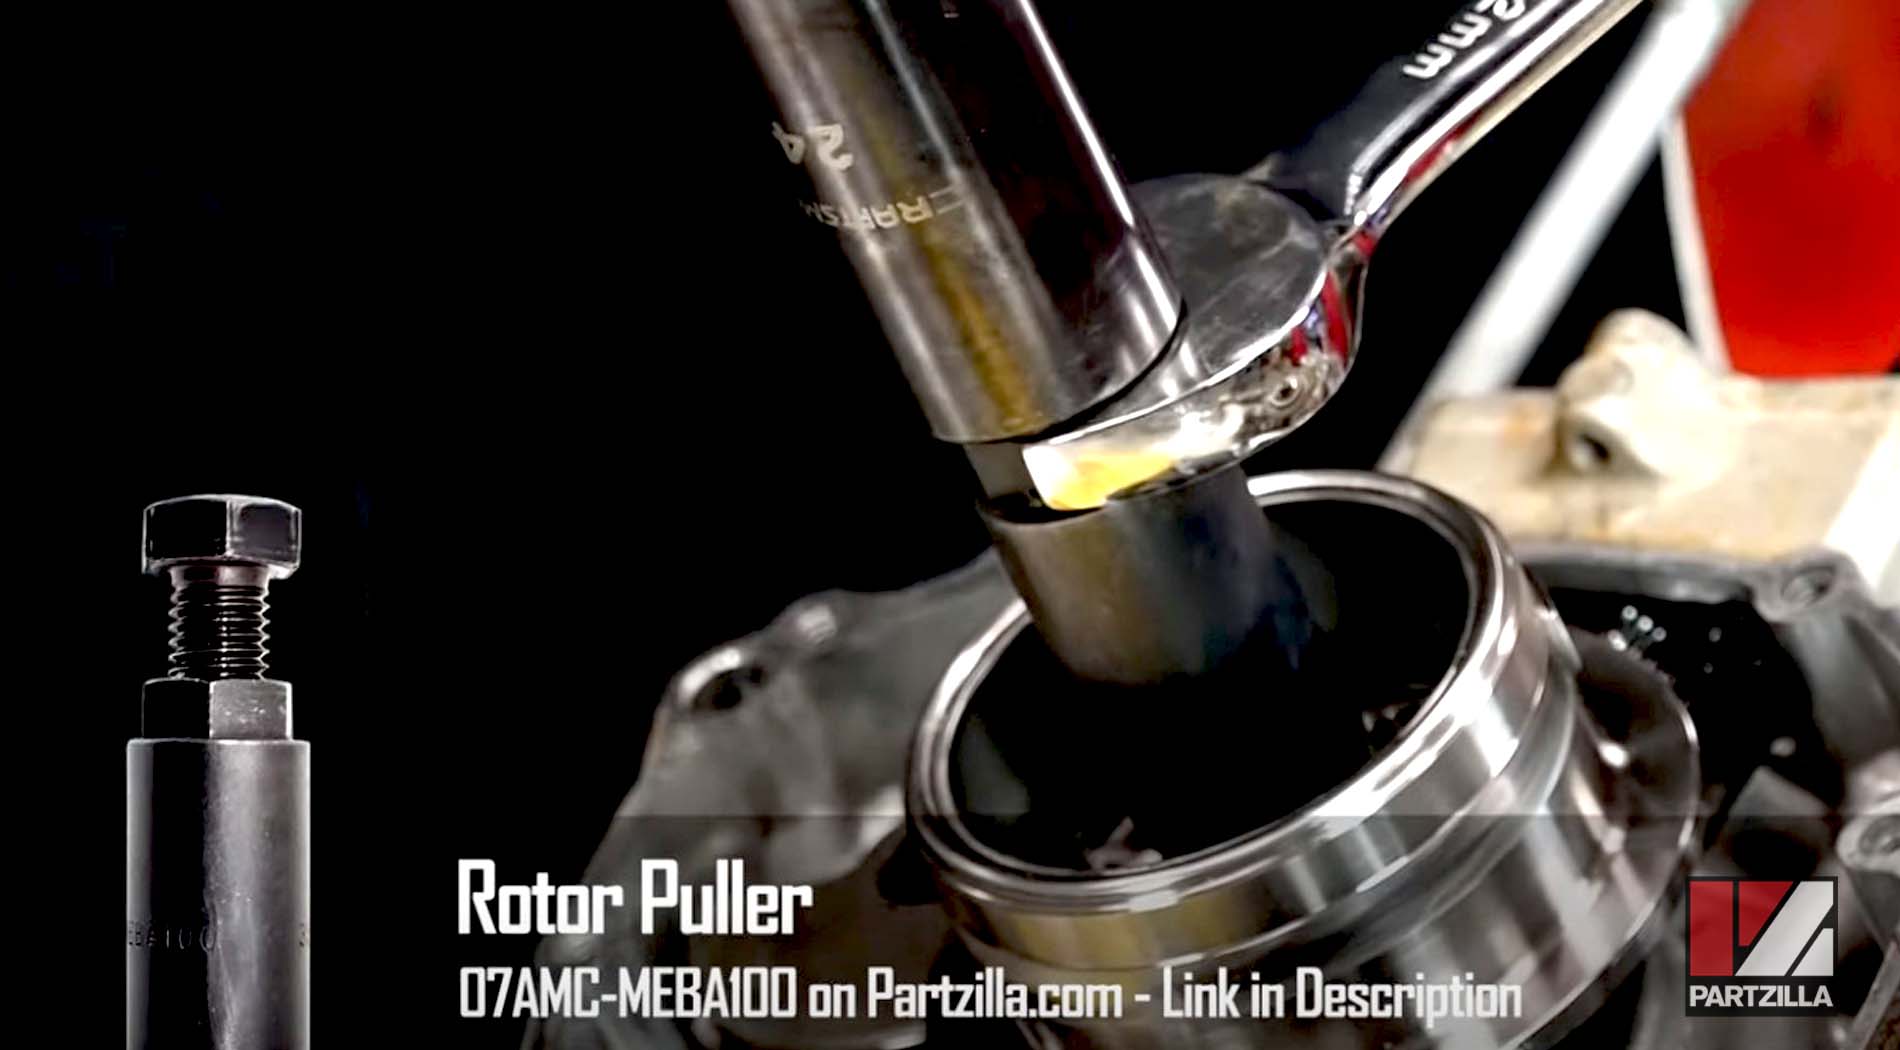 Honda motorcycle rotor puller tool